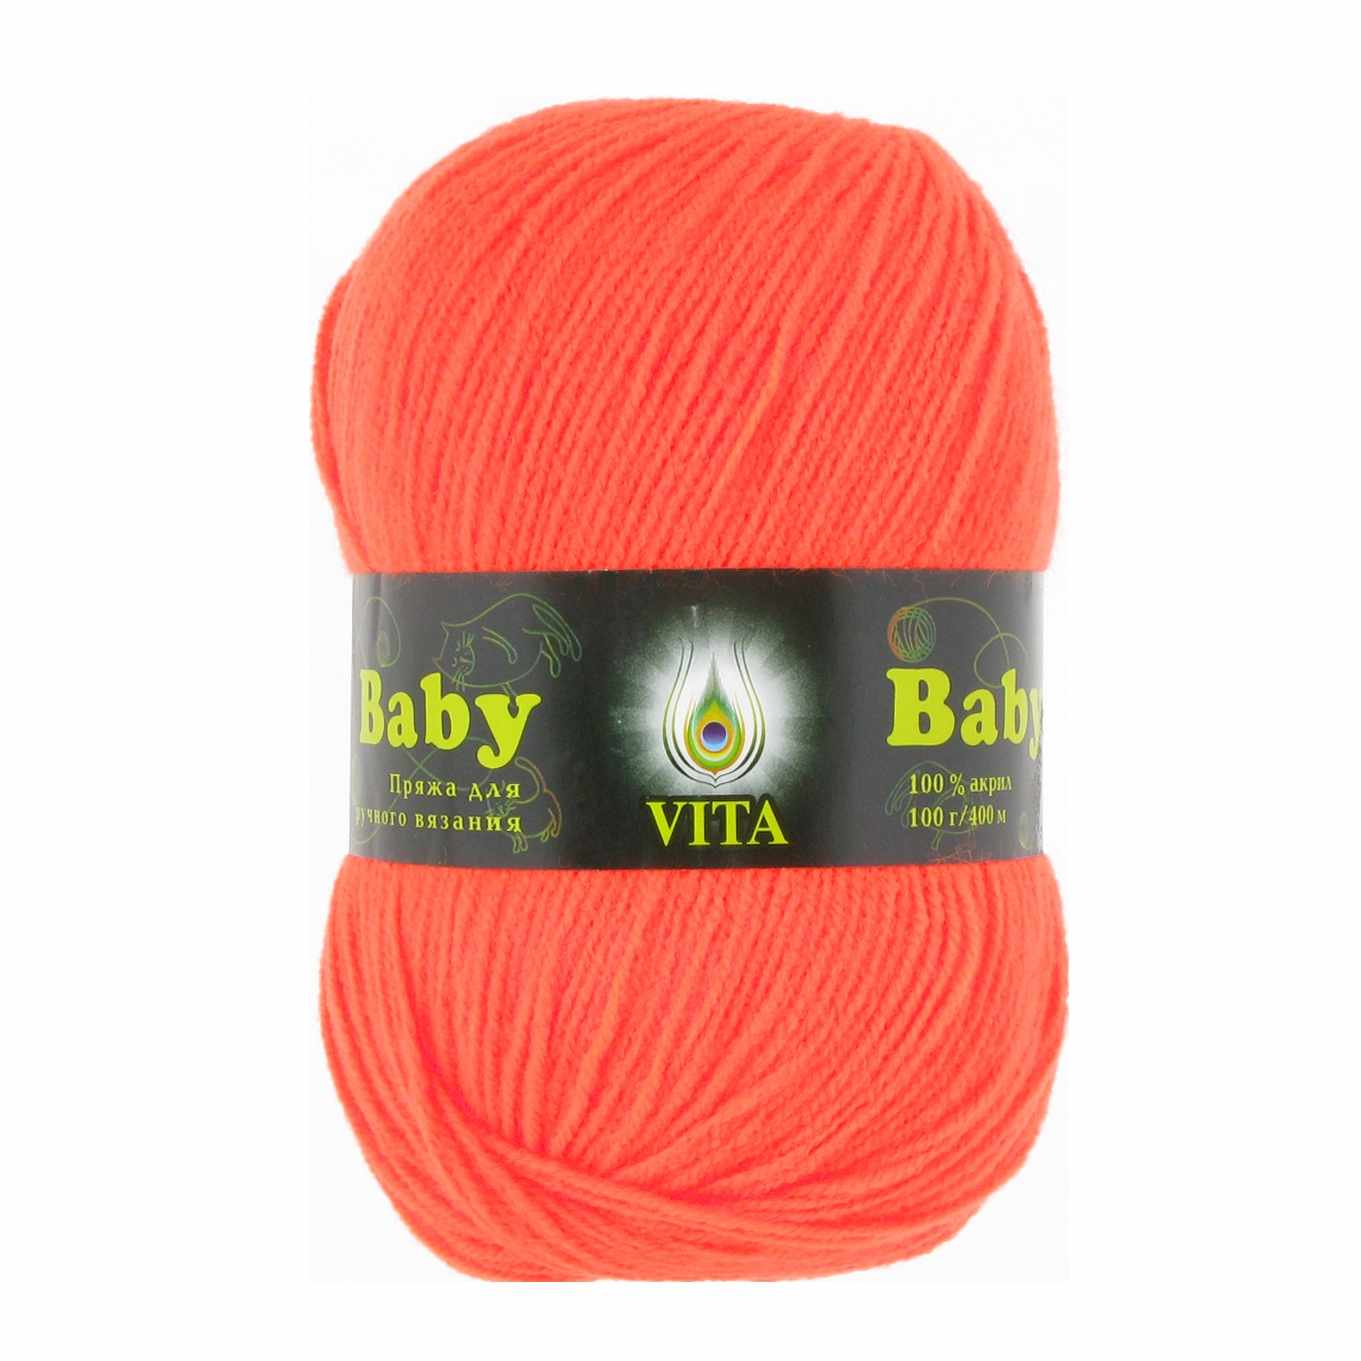 Пряжа VITA Baby Цвет.2855 Ультра-оранжевый